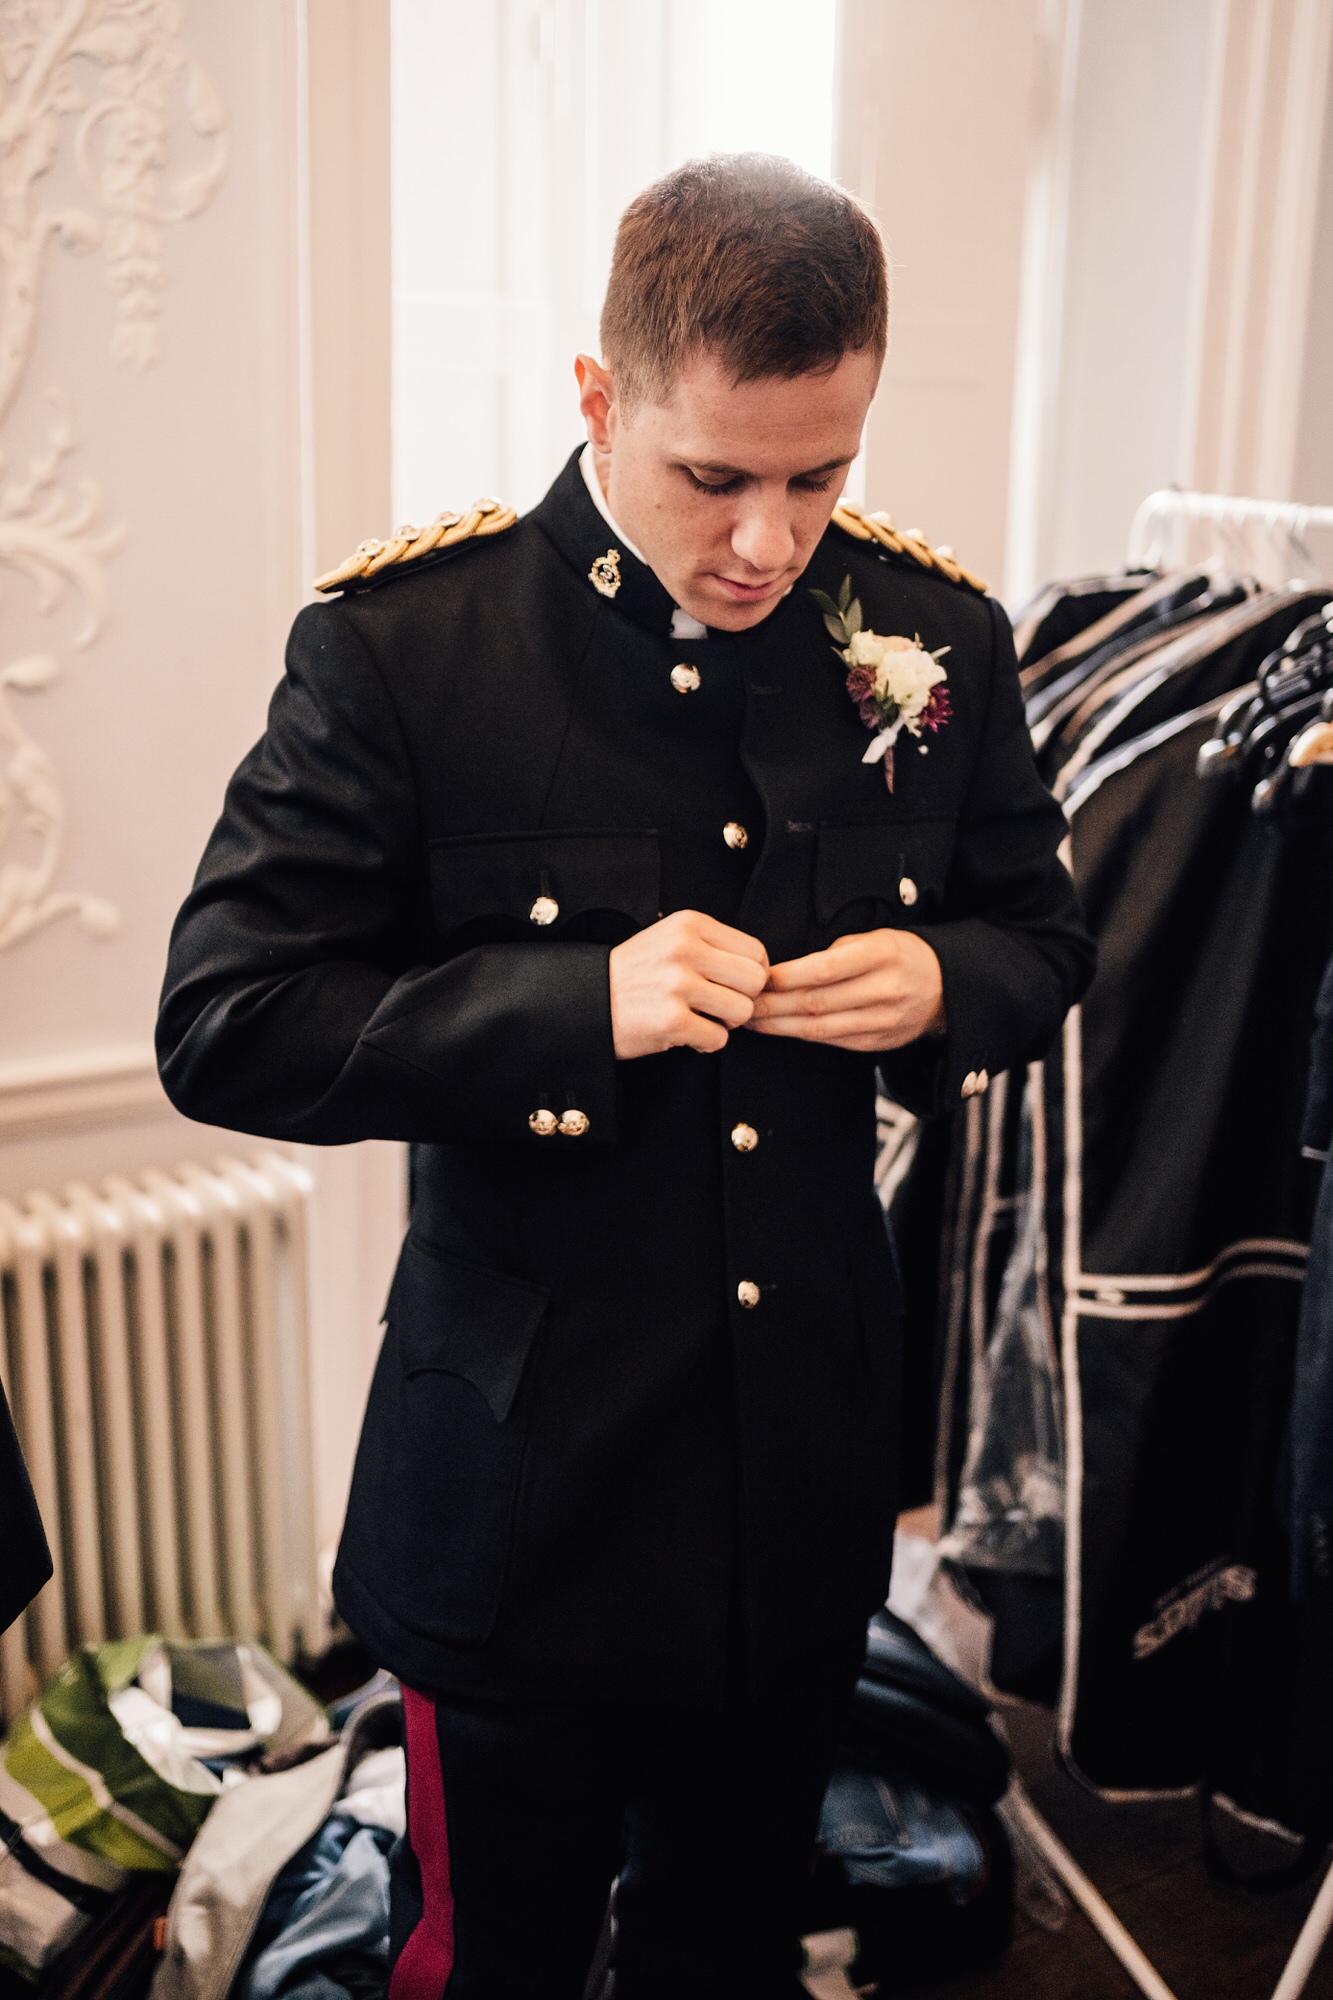 Groom getting ready in military uniform 